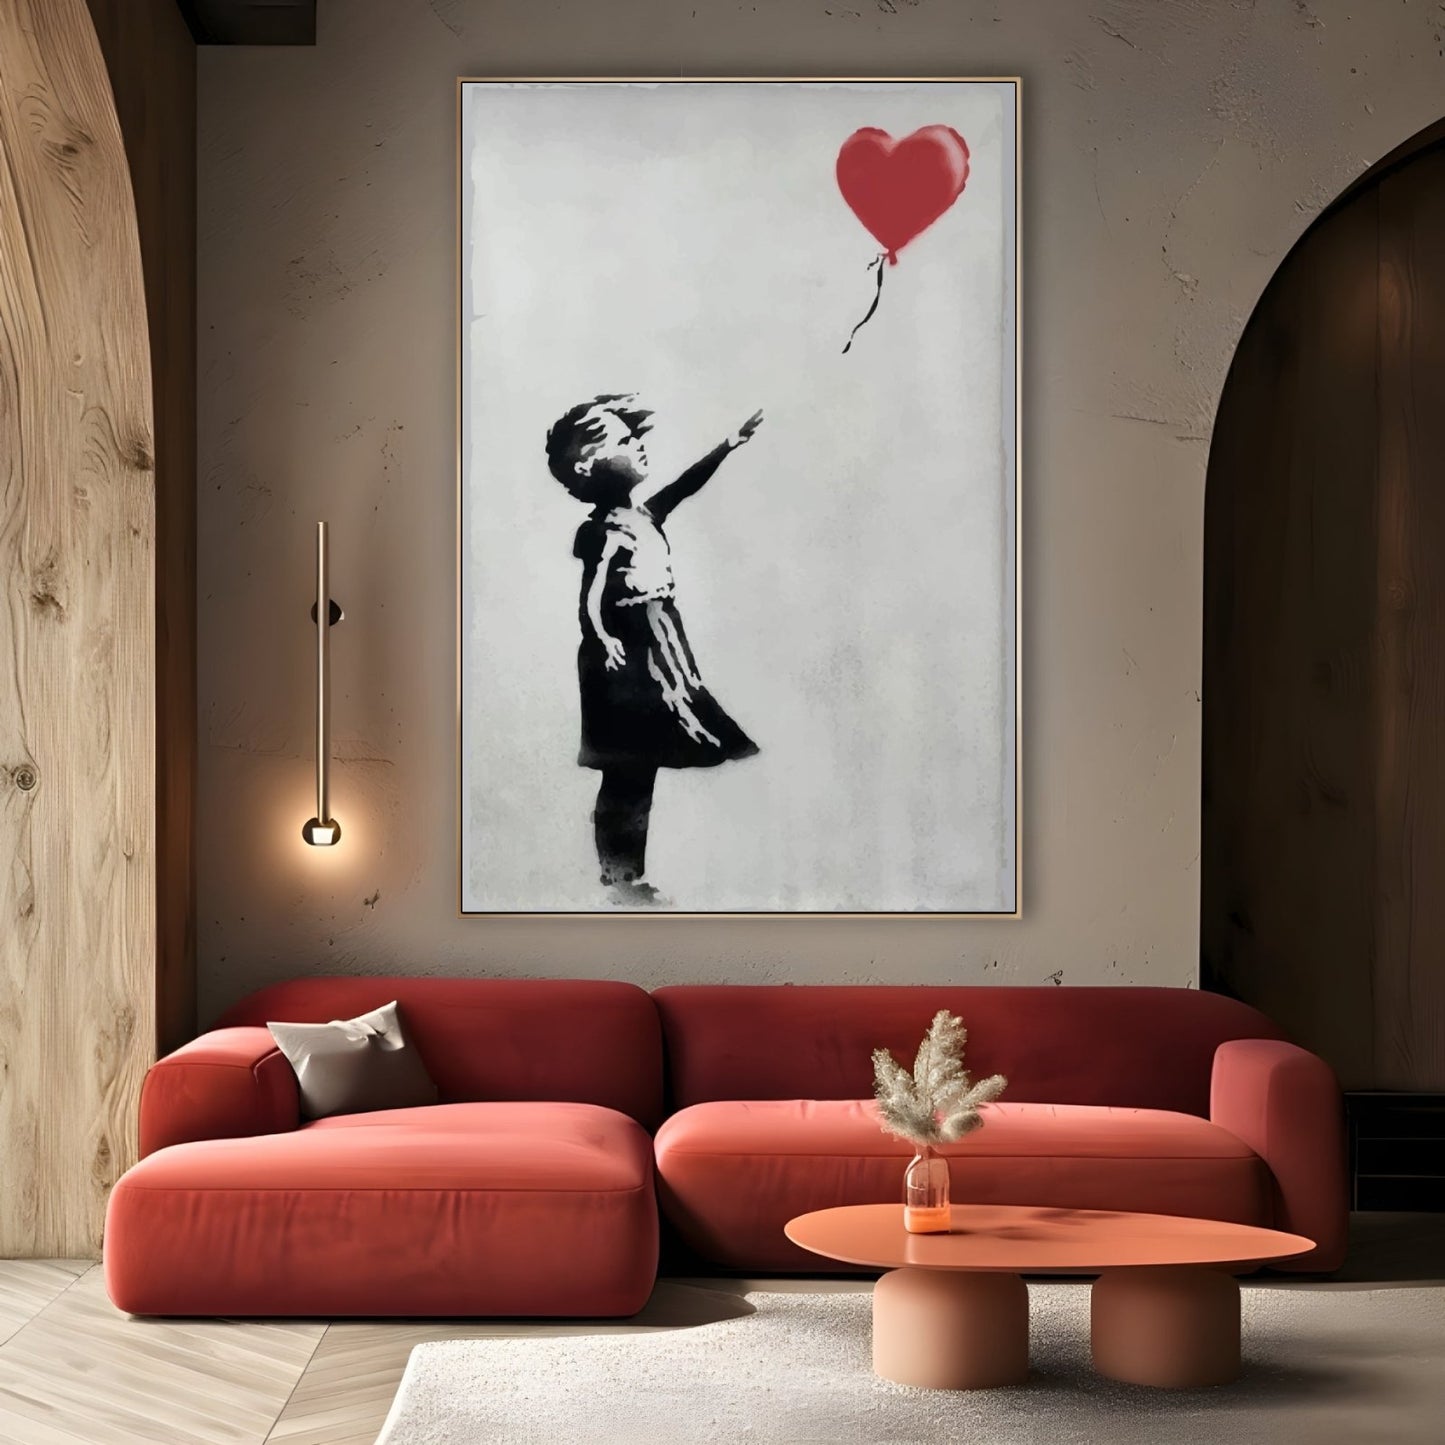 Balion Girl, Banksy